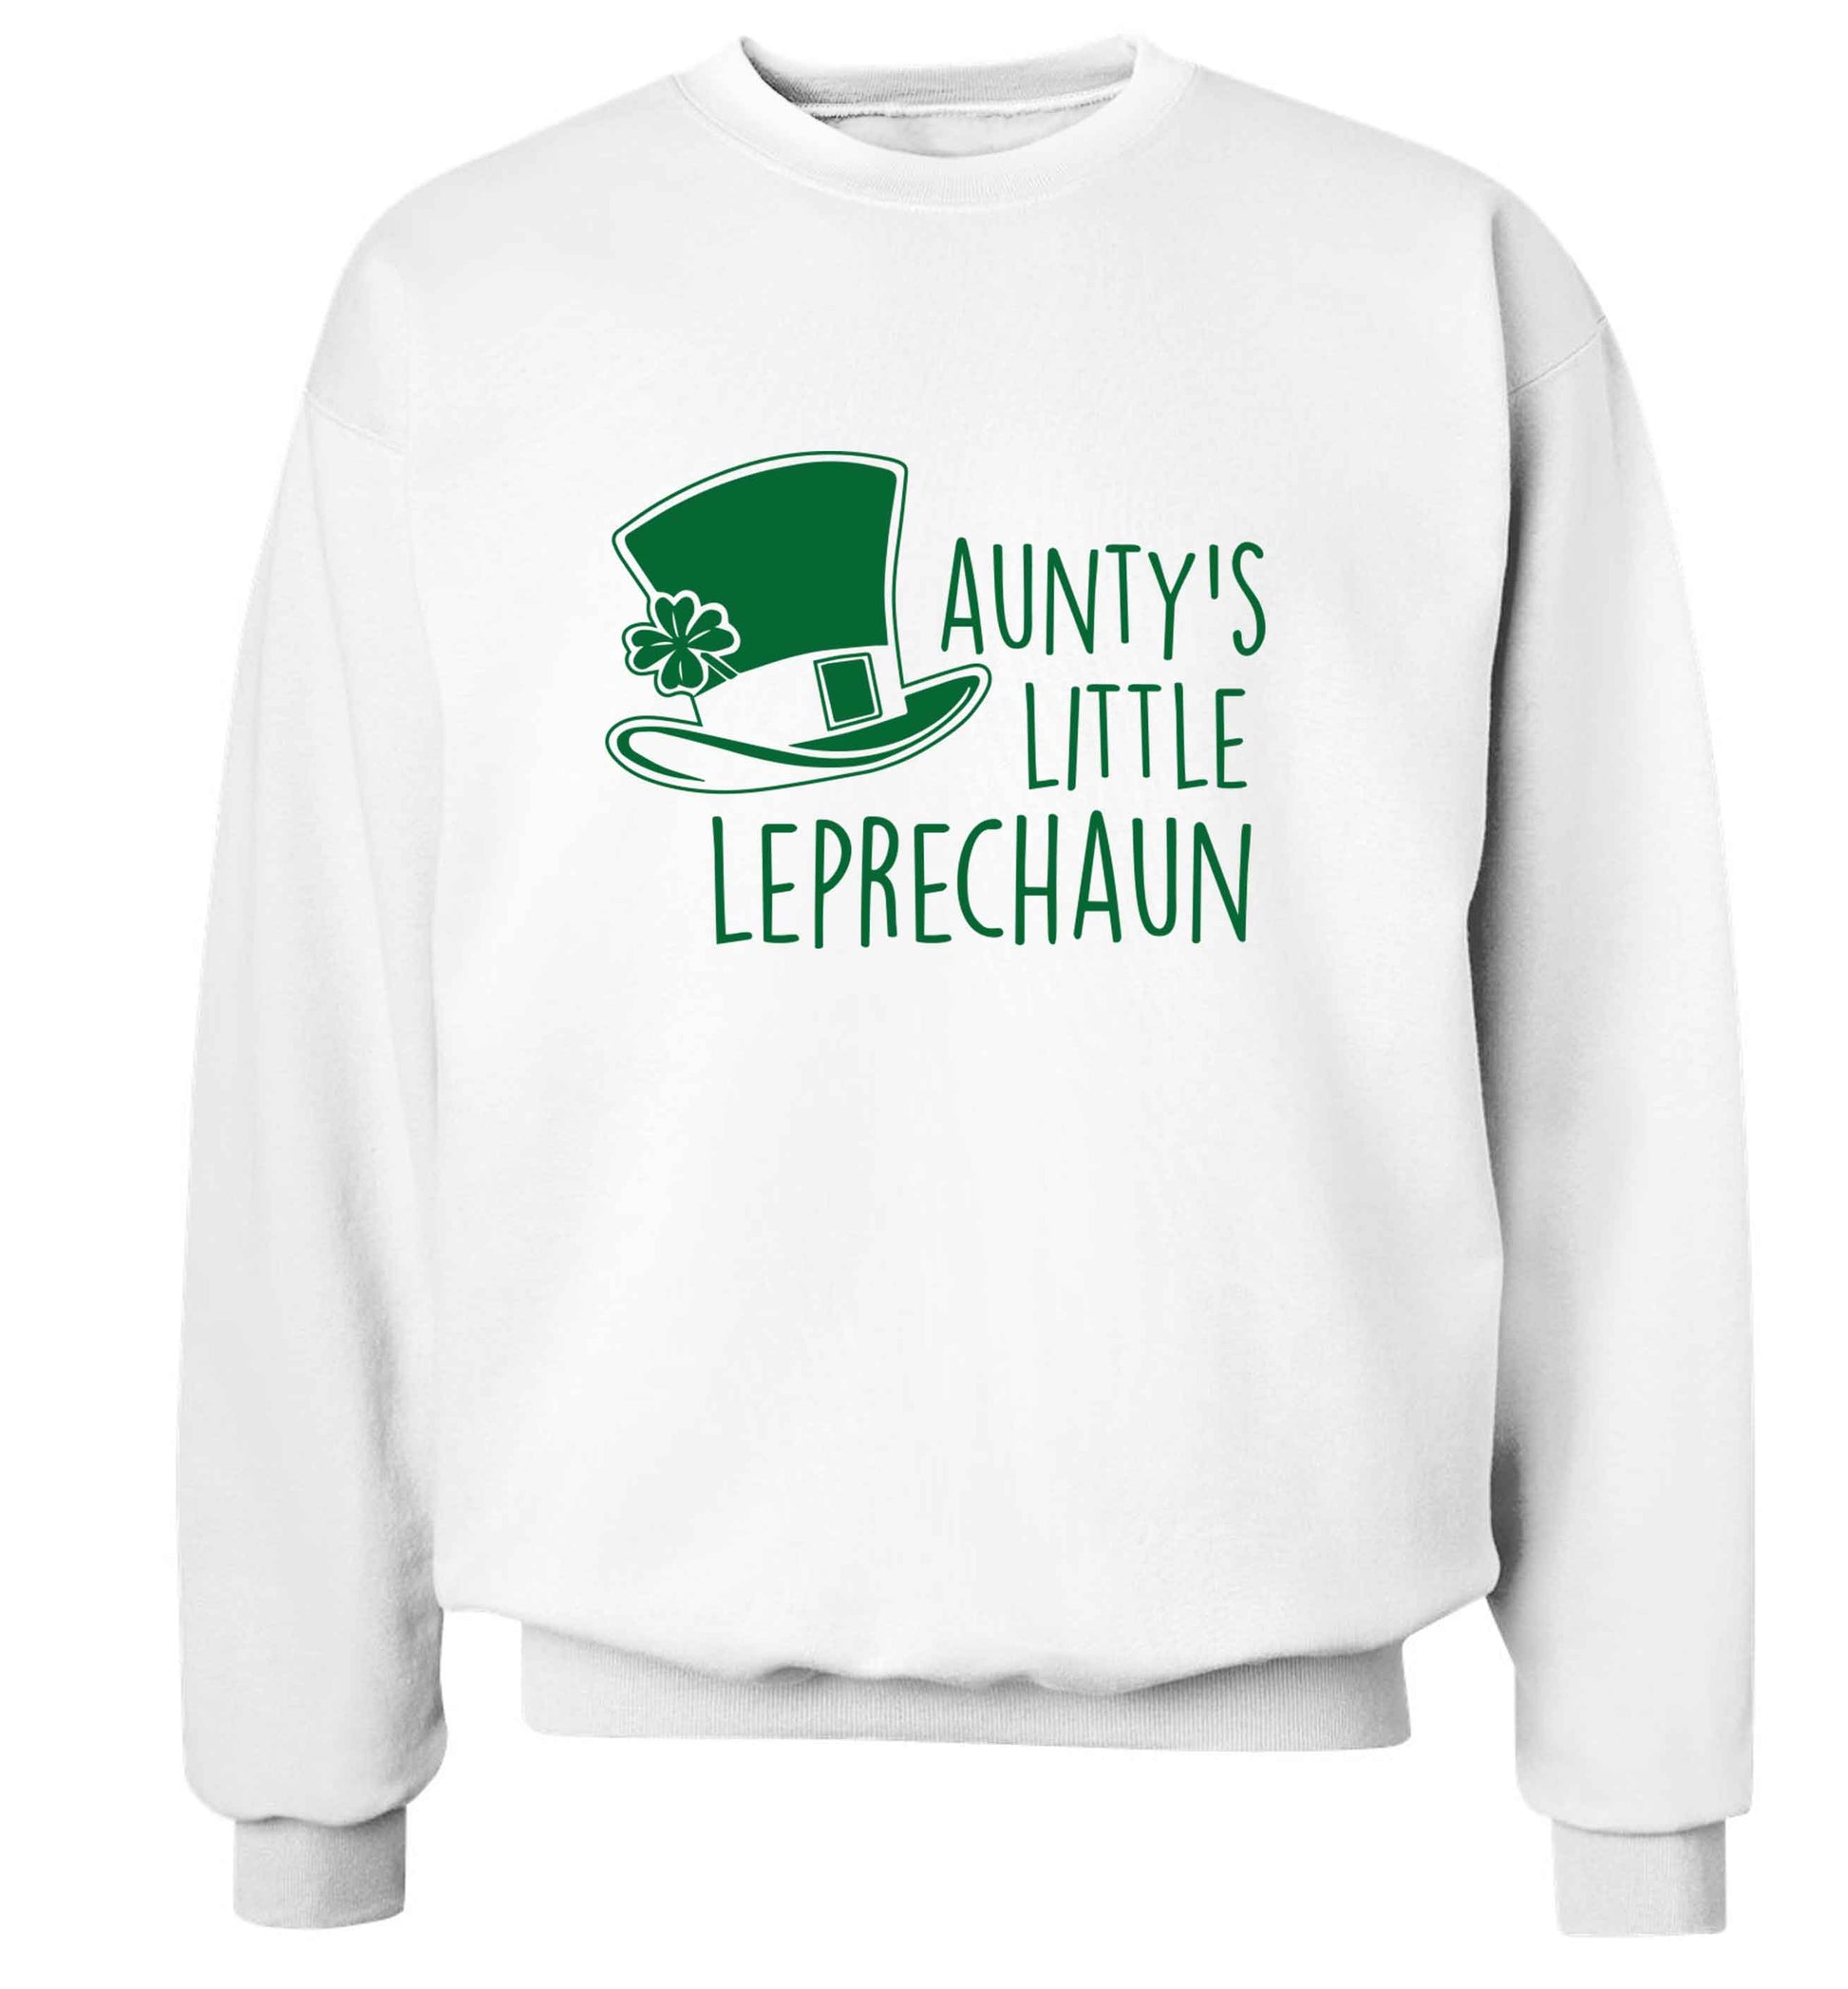 Aunty's little leprechaun adult's unisex white sweater 2XL